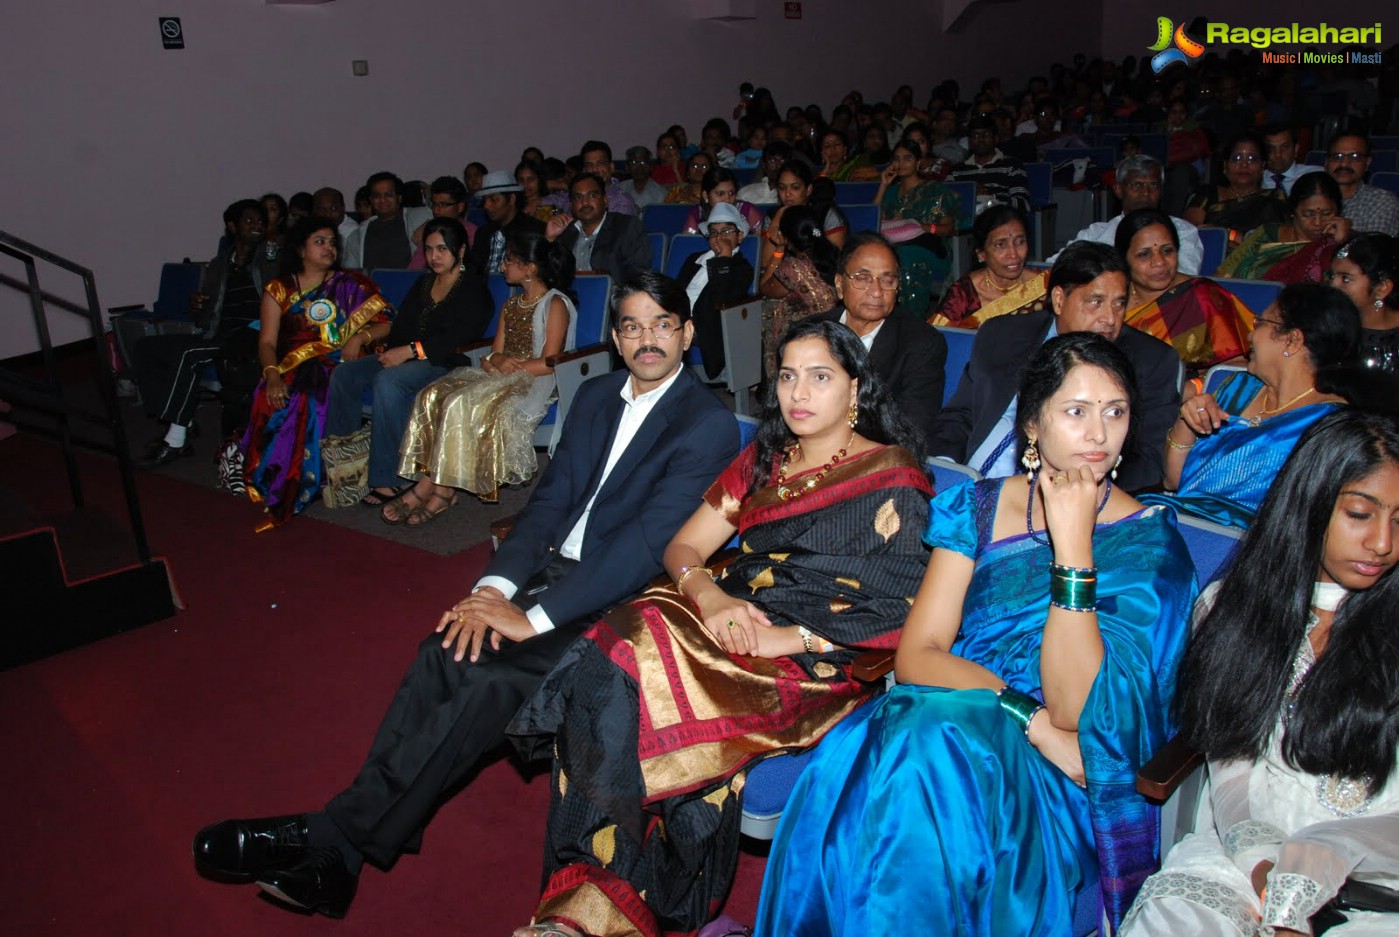 Telugu Literary and Cultural Association Deepavali